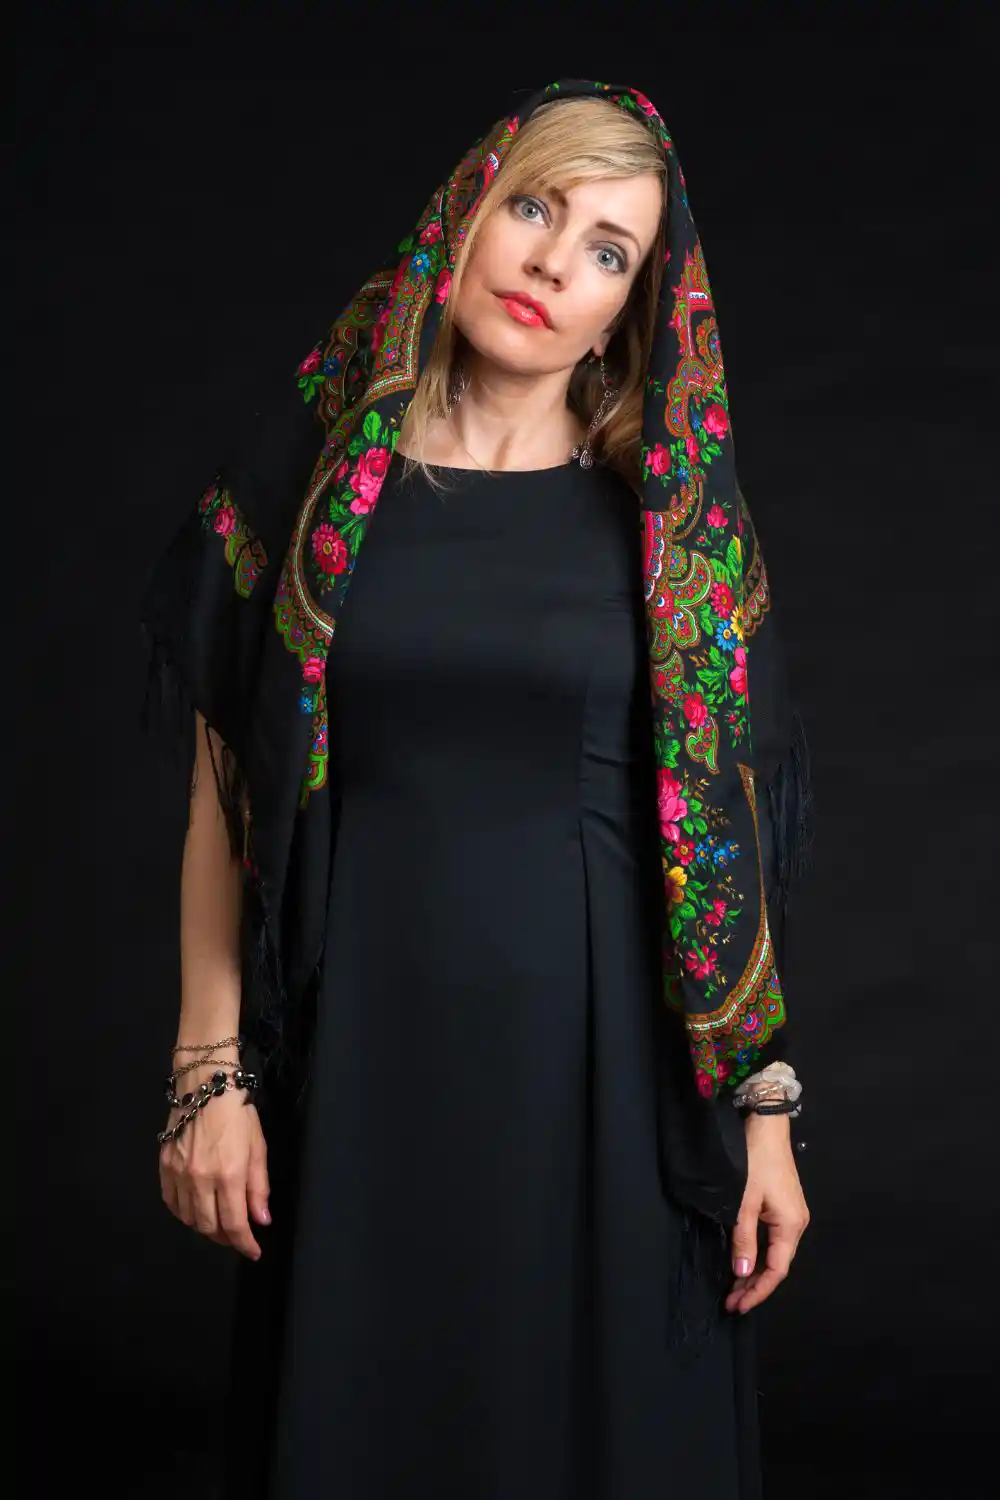 Russian girl in national headscarf